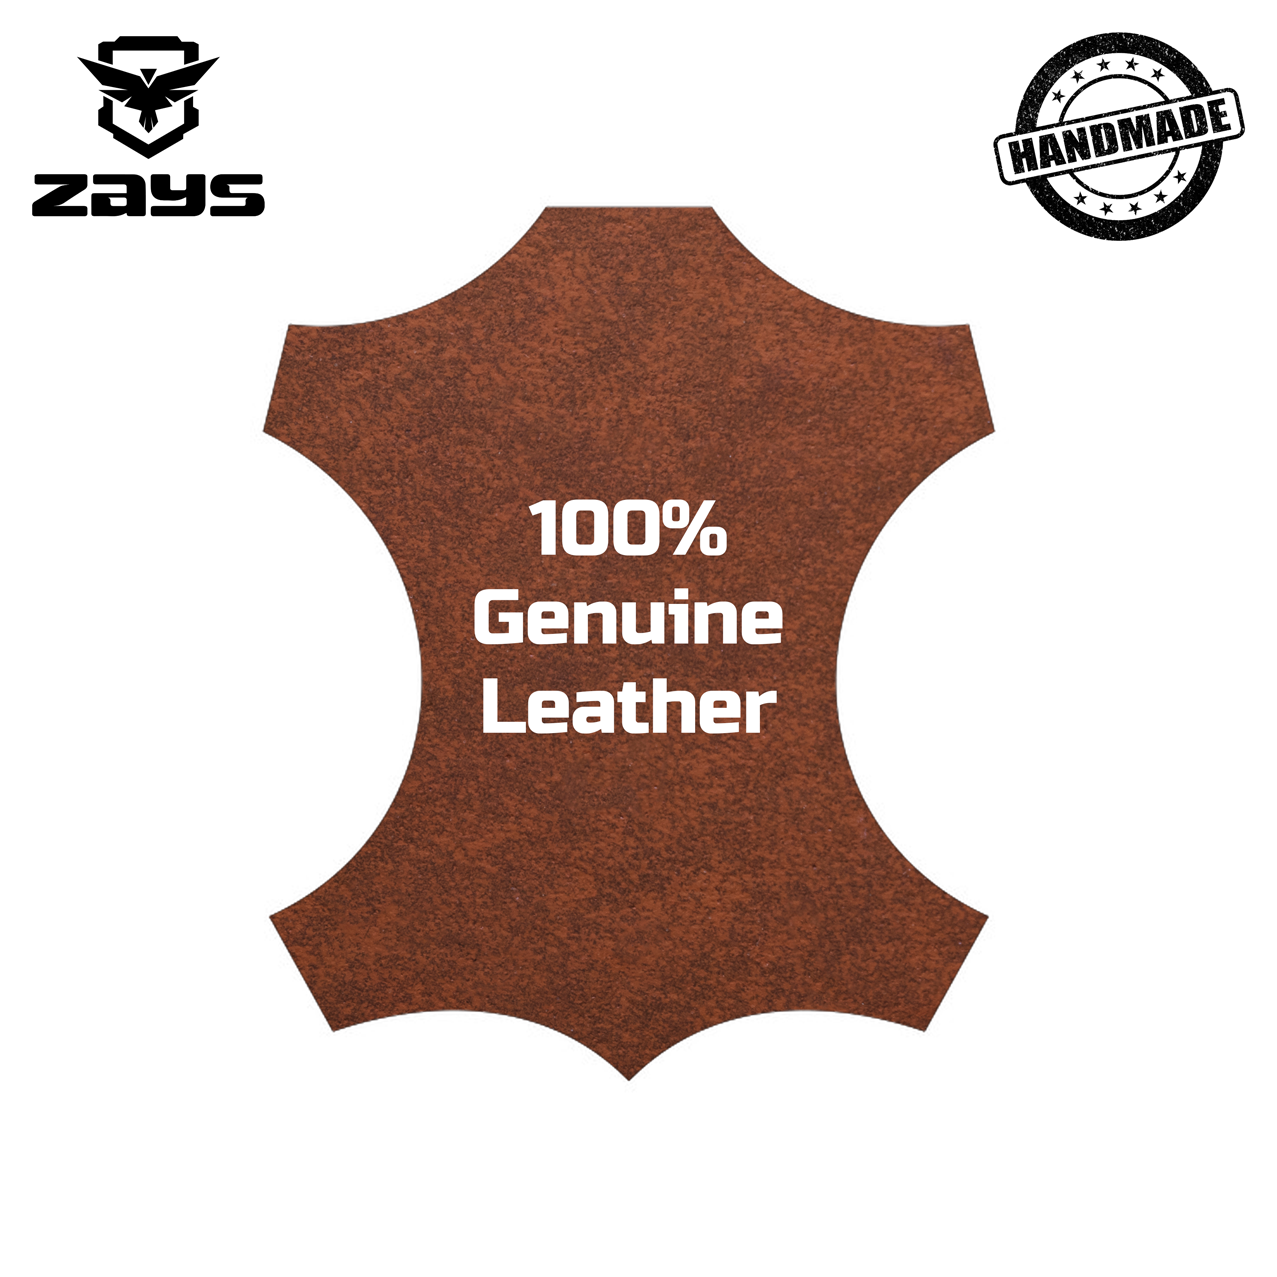 Zays Leather Premium Oxford Shoe For Men (Black) - ZAYSSF21